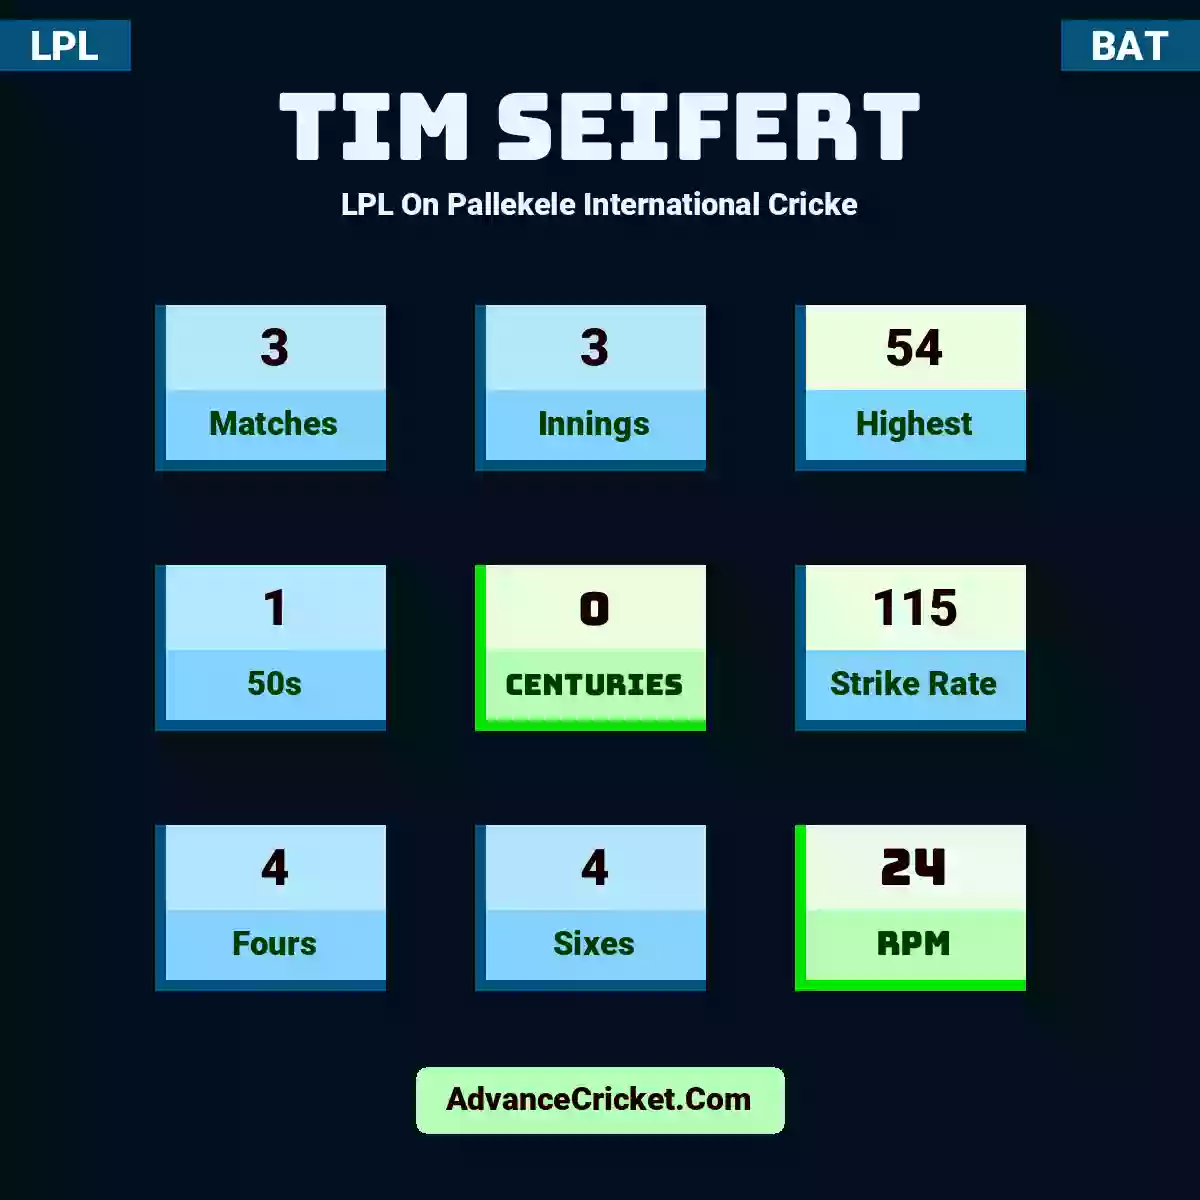 Tim Seifert LPL  On Pallekele International Cricke, Tim Seifert played 3 matches, scored 54 runs as highest, 1 half-centuries, and 0 centuries, with a strike rate of 115. T.Seifert hit 4 fours and 4 sixes, with an RPM of 24.